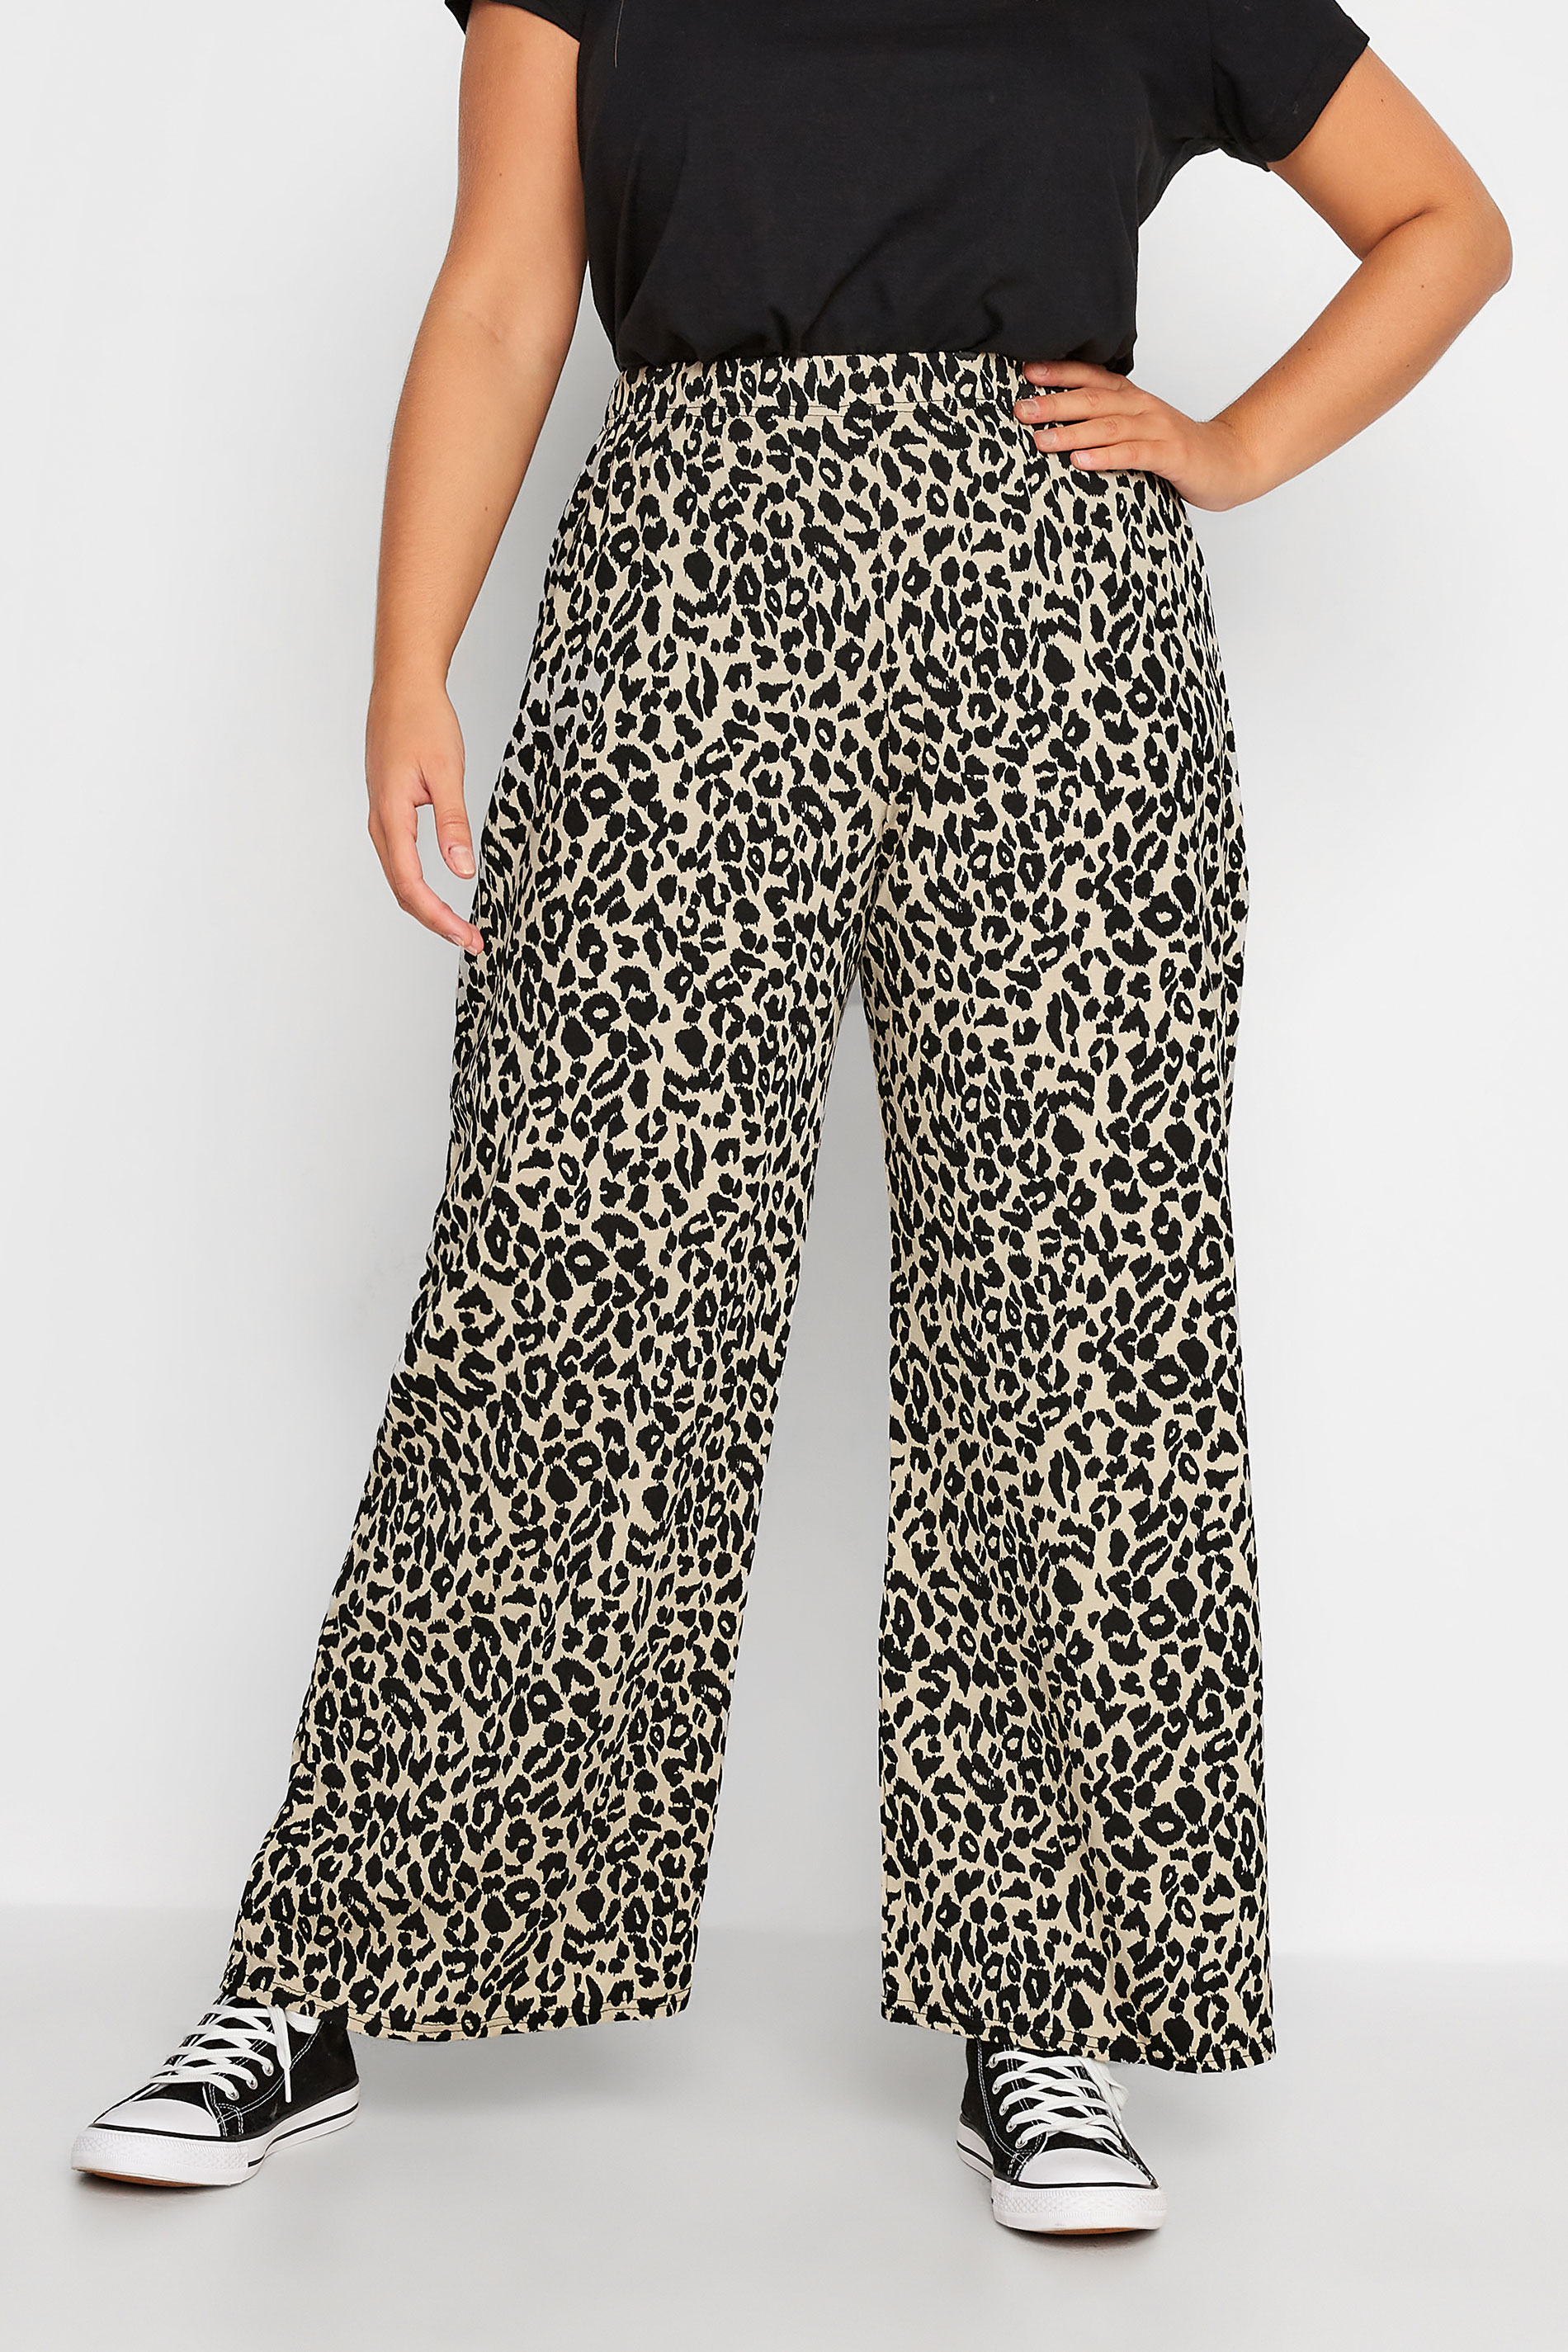 Leopard Print Pockets High Waisted Wide Leg Palazzo Casual Pants  Printed  wide leg pants Womens wide leg pants Fashion